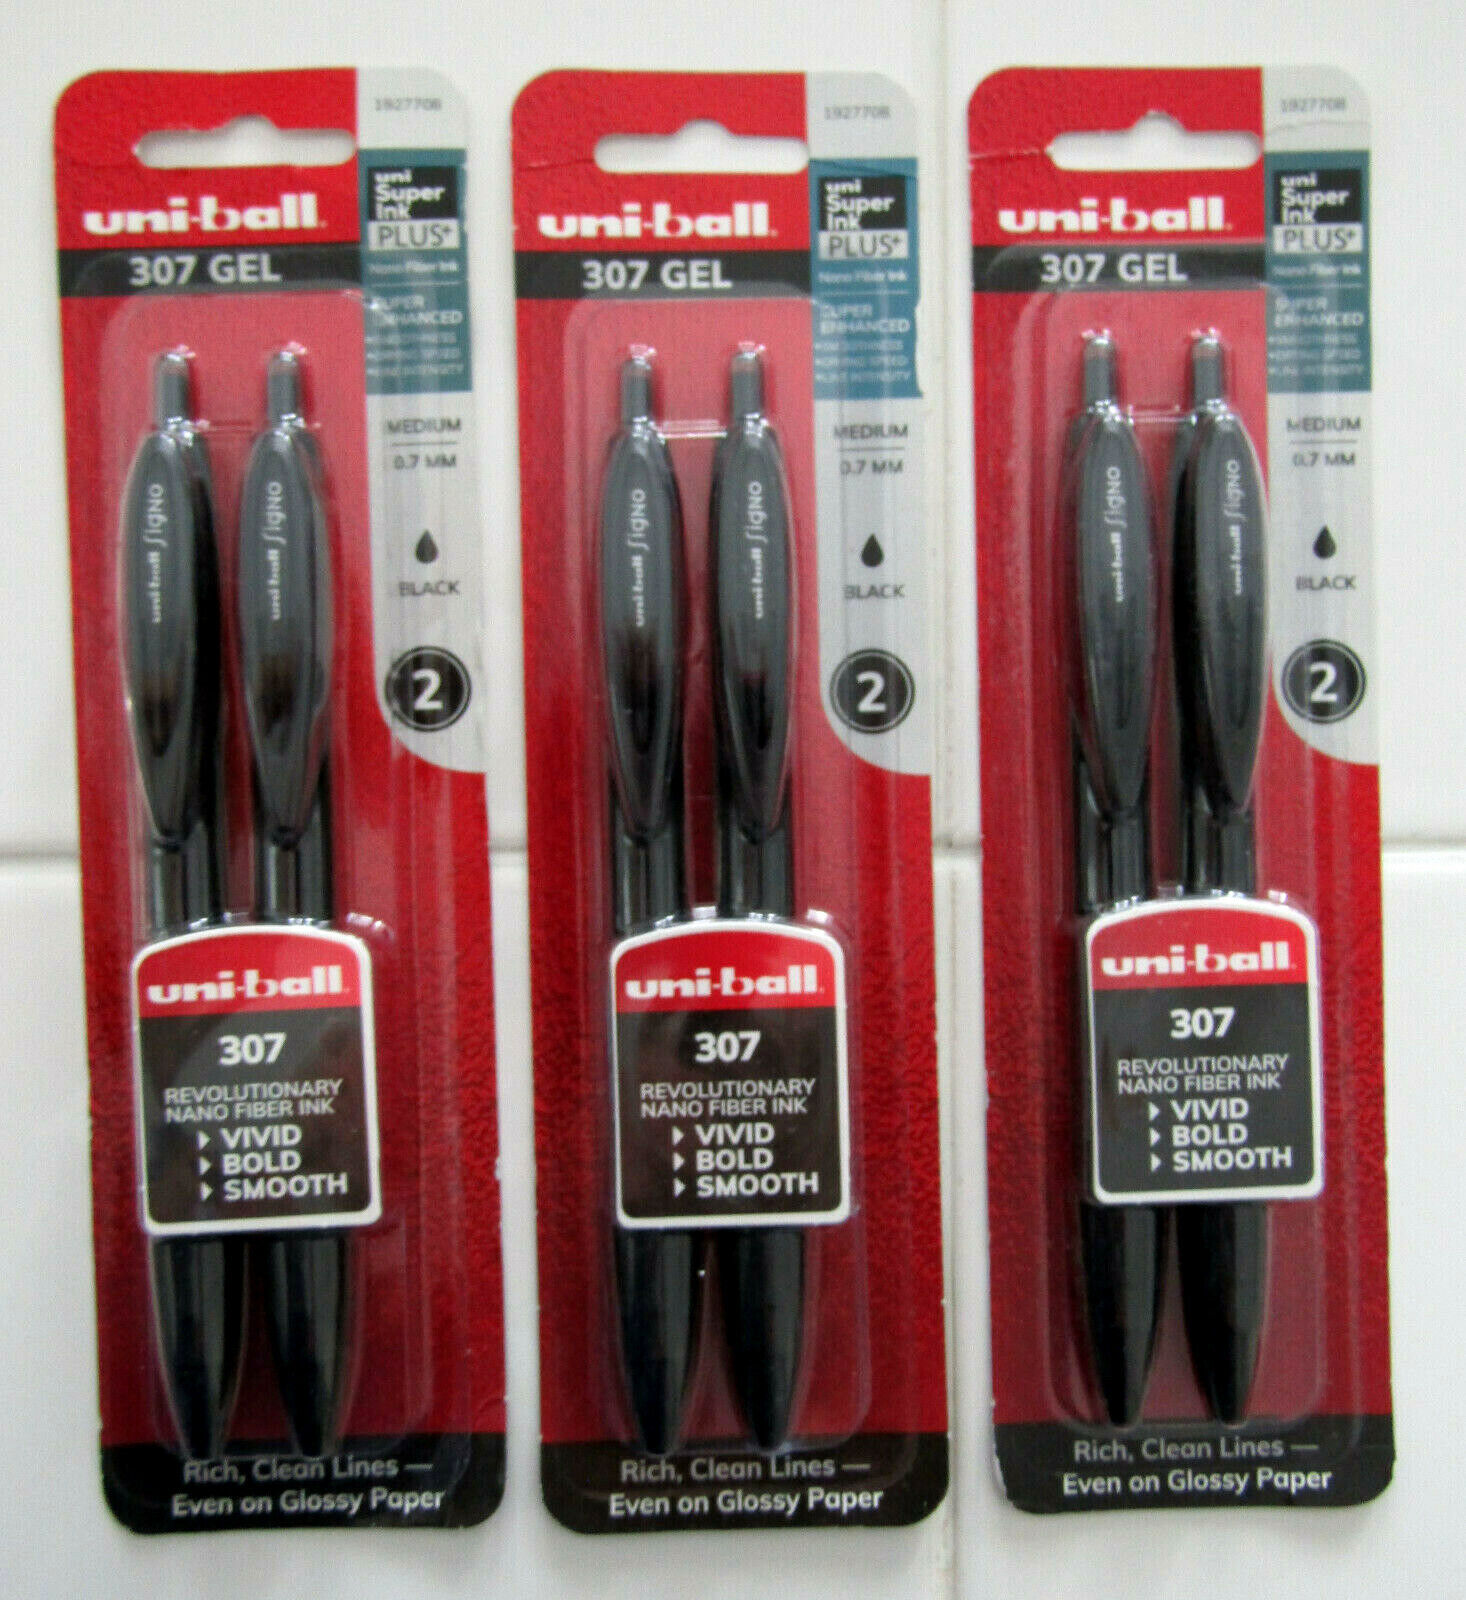 6X Uni-ball 307 Gel Pen, Black, 0.7mm Medium, Rich Clean Lines, 3 Packs uni-ball 1927708